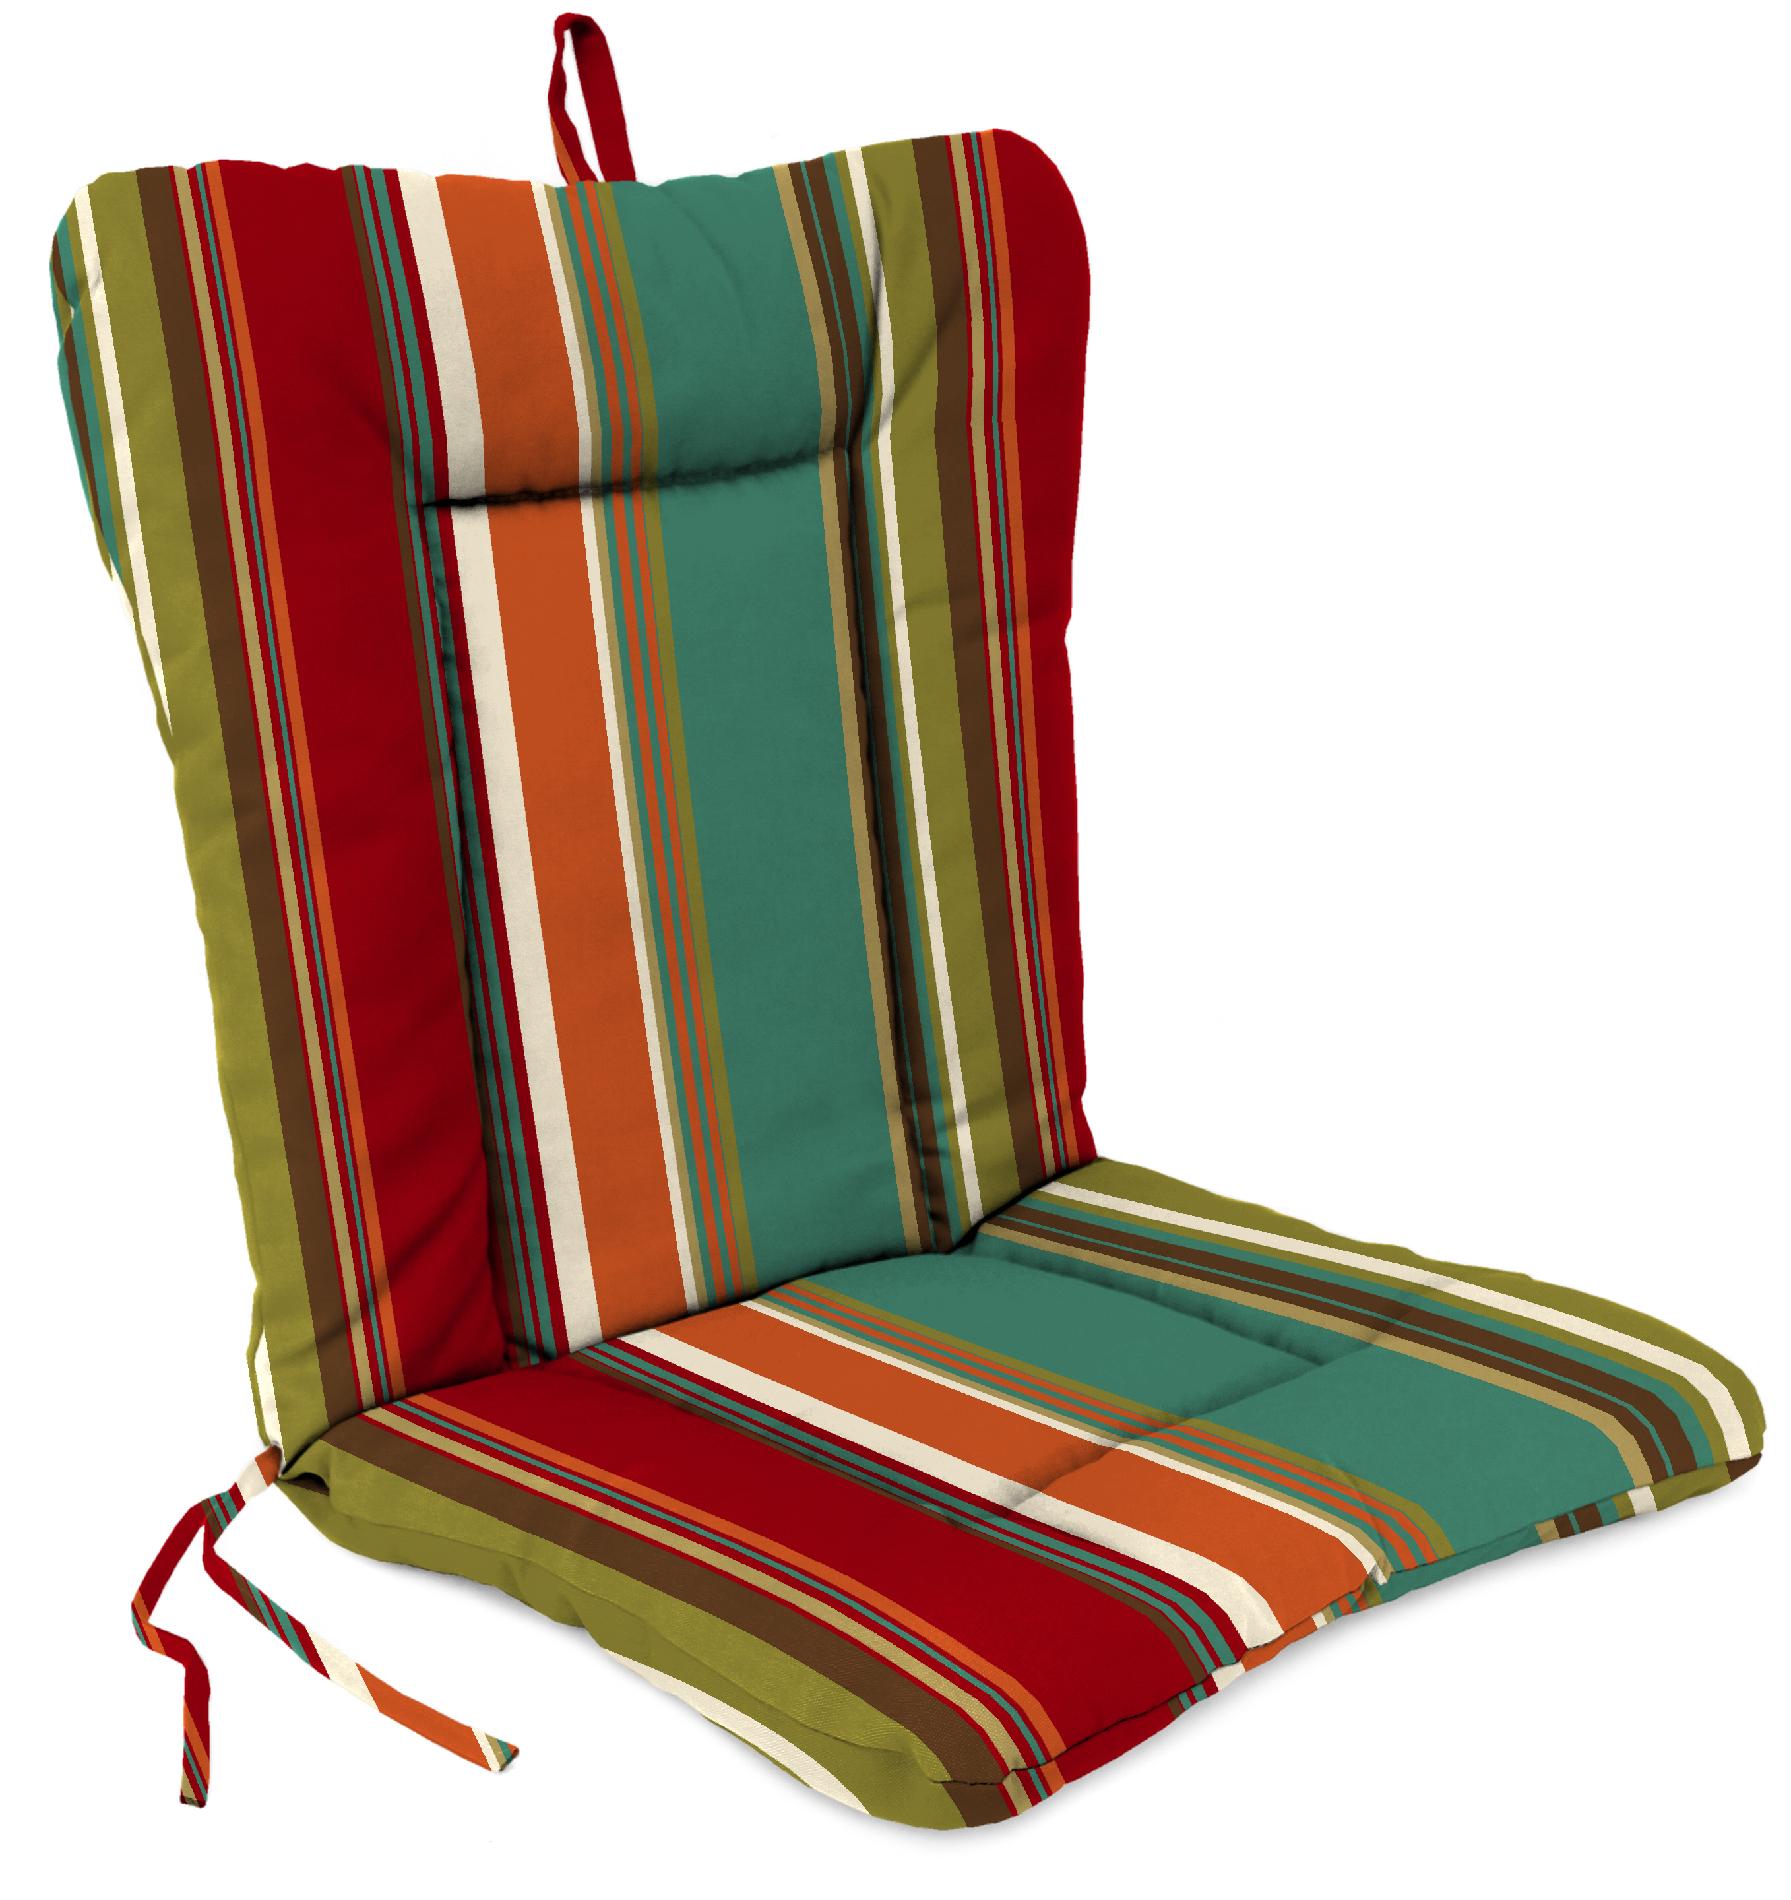 Euro Style Chair Cushion in Westport Teal